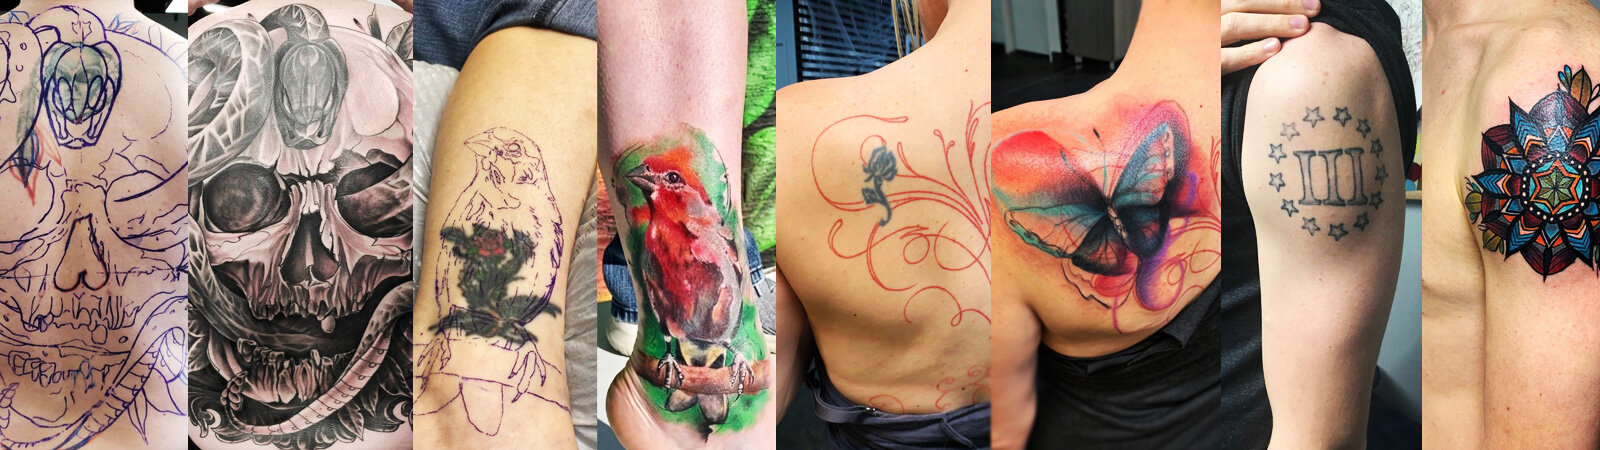 Full color Carl Fredricksen from Pixars movie UP tattoo by Jay Blackburn   Tattoos